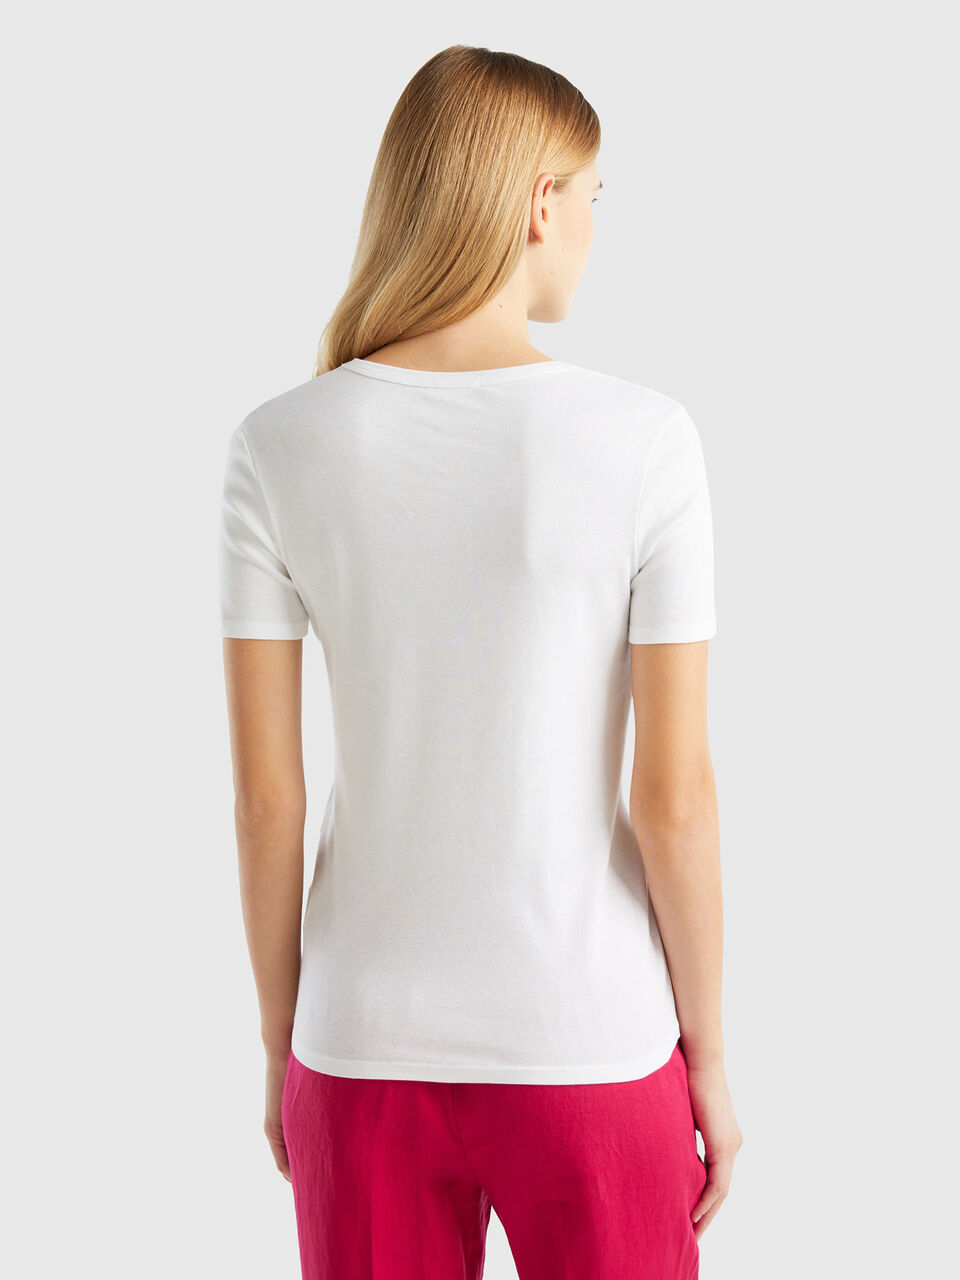 T-shirt in 100% cotton glitter Benetton print with - White logo 